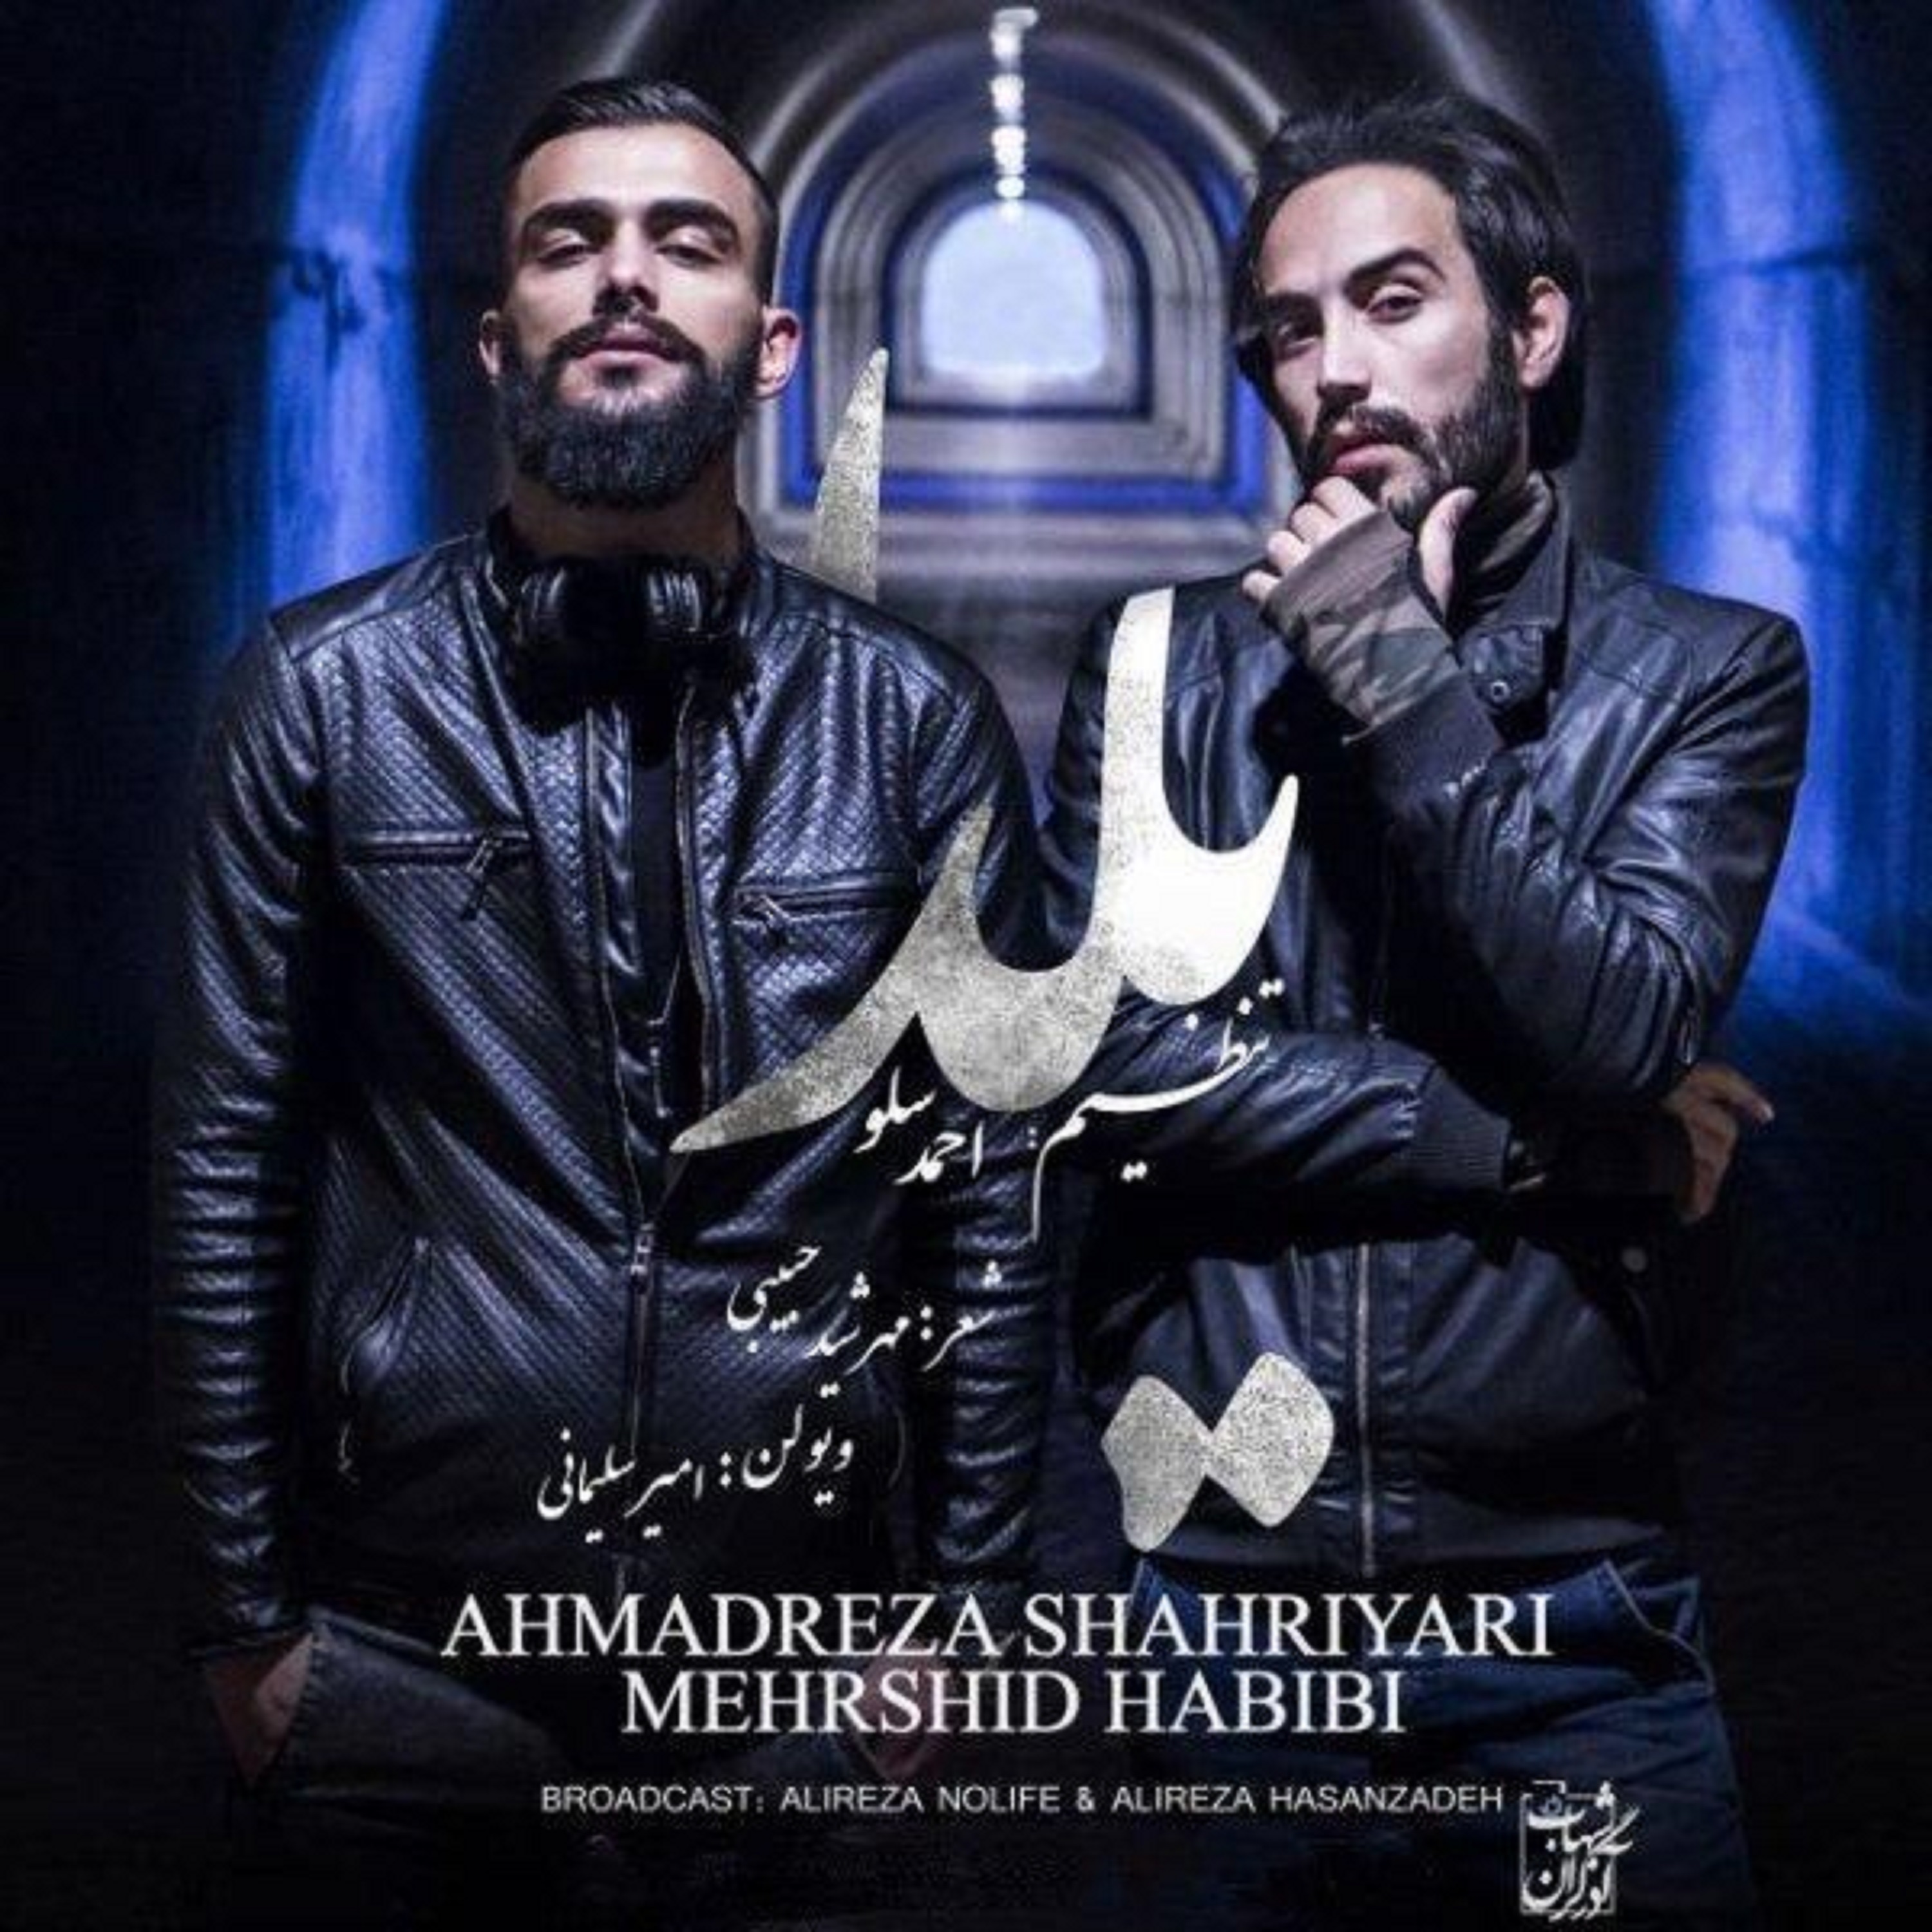  دانلود آهنگ جدید احمد سلو - یلدا | Download New Music By Ahmad Solo - Yalda (feat. Mehrshid Habibi)